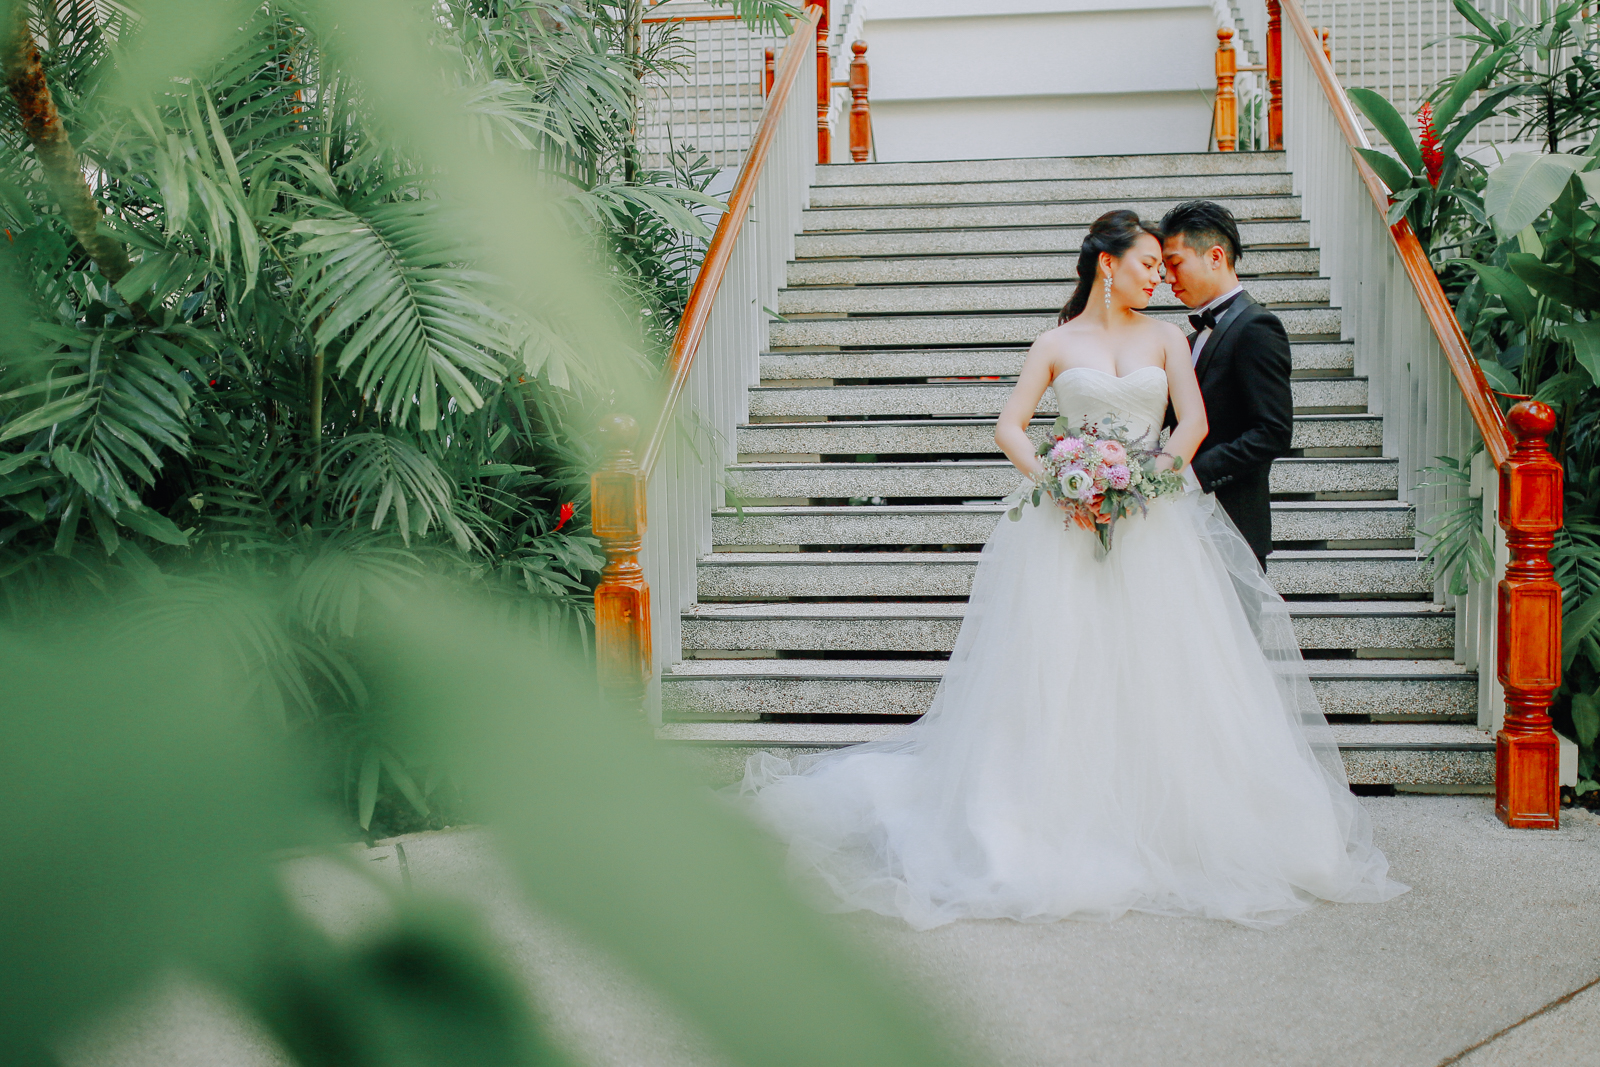 ctp 2 5 - Shojiro & Hiroko's Shangrila Mactan Cebu Intimate Wedding